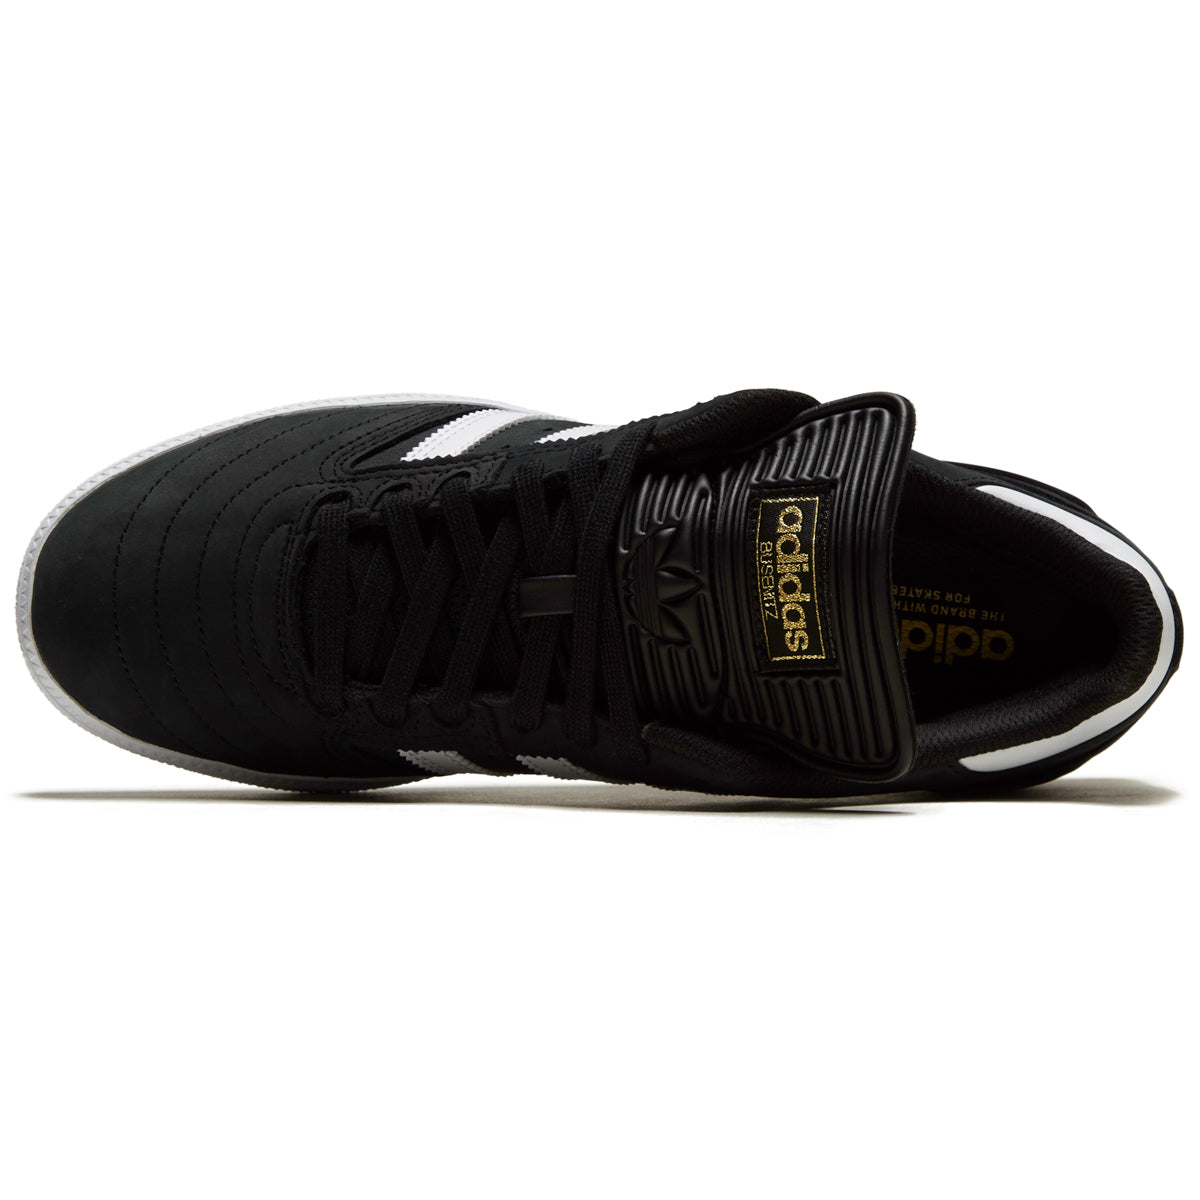 Adidas Busenitz Shoes - Core Black/White/Gold Metallic image 3